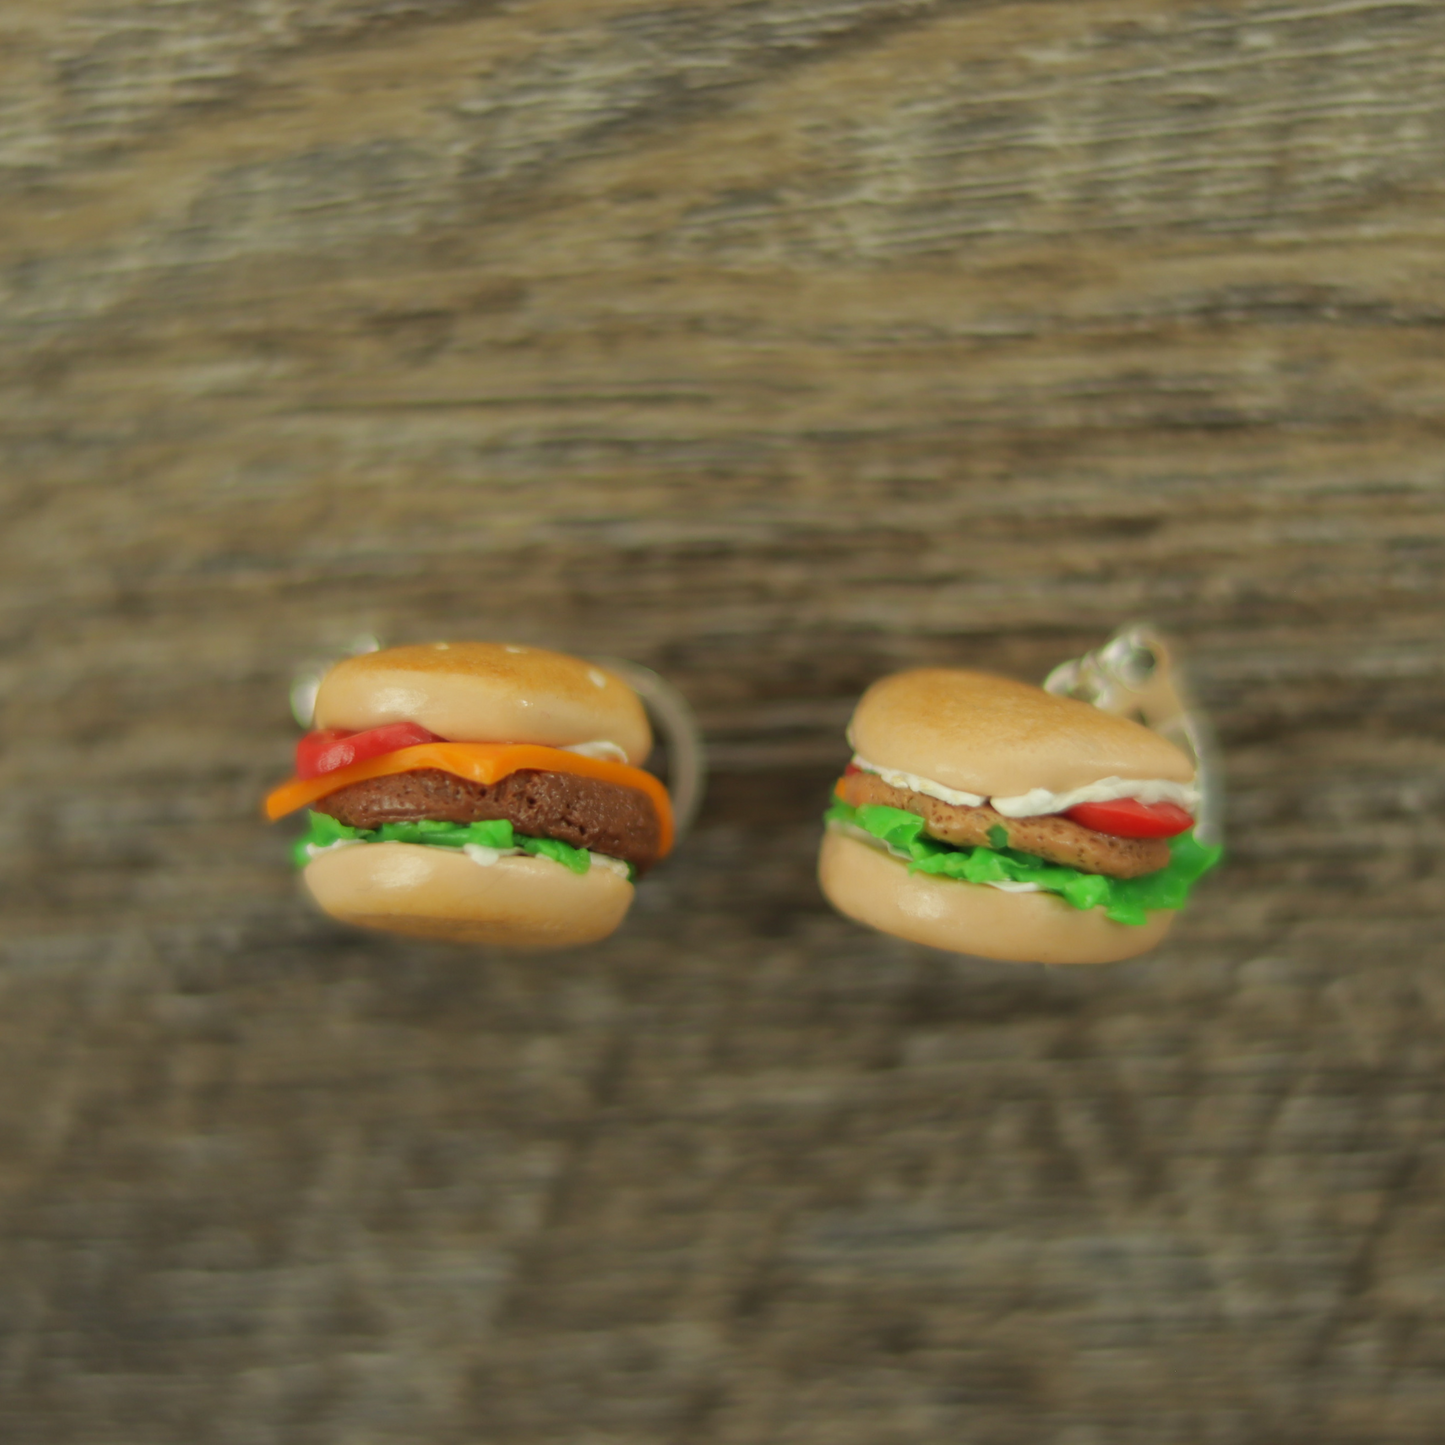 Vegan Cheese Burger Stitch Markers, 2 pcs